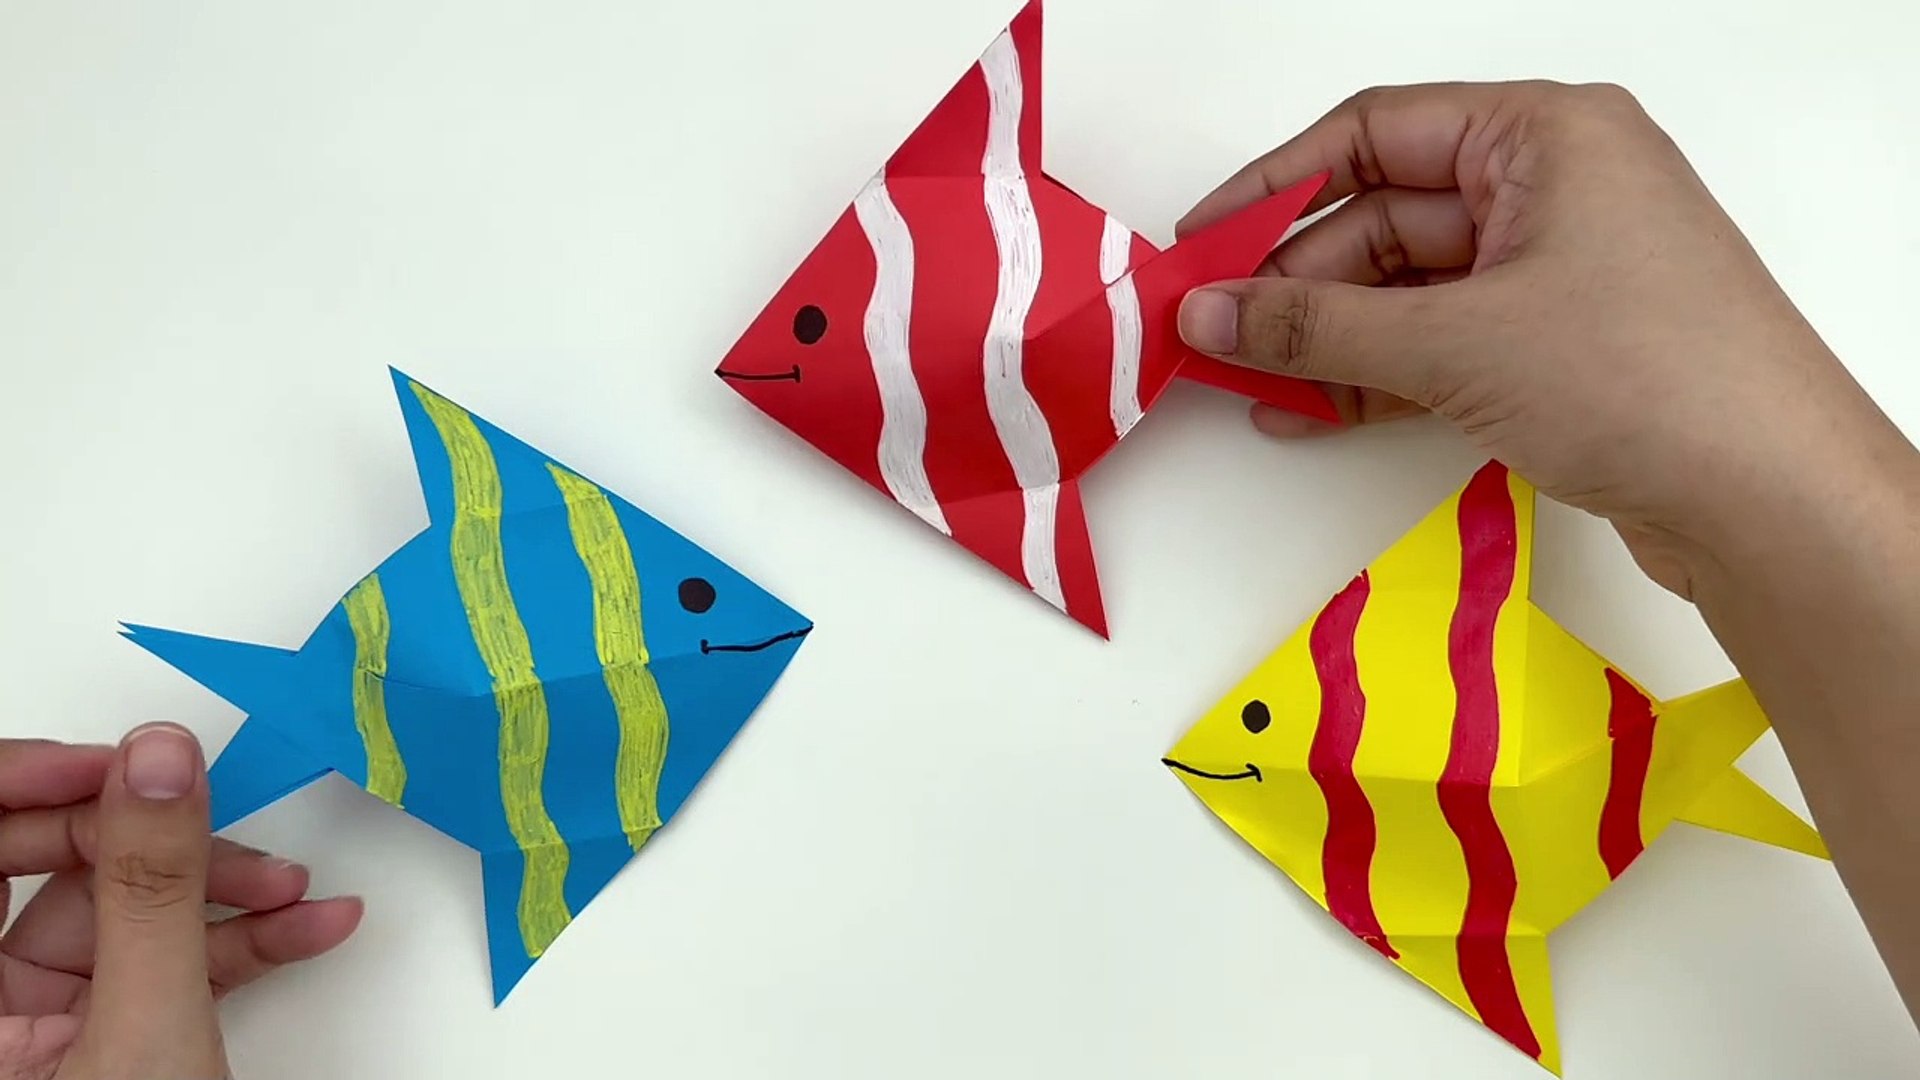 Cute Easy Paper Craft / School Craft Ideas / DIY Craft / Origami